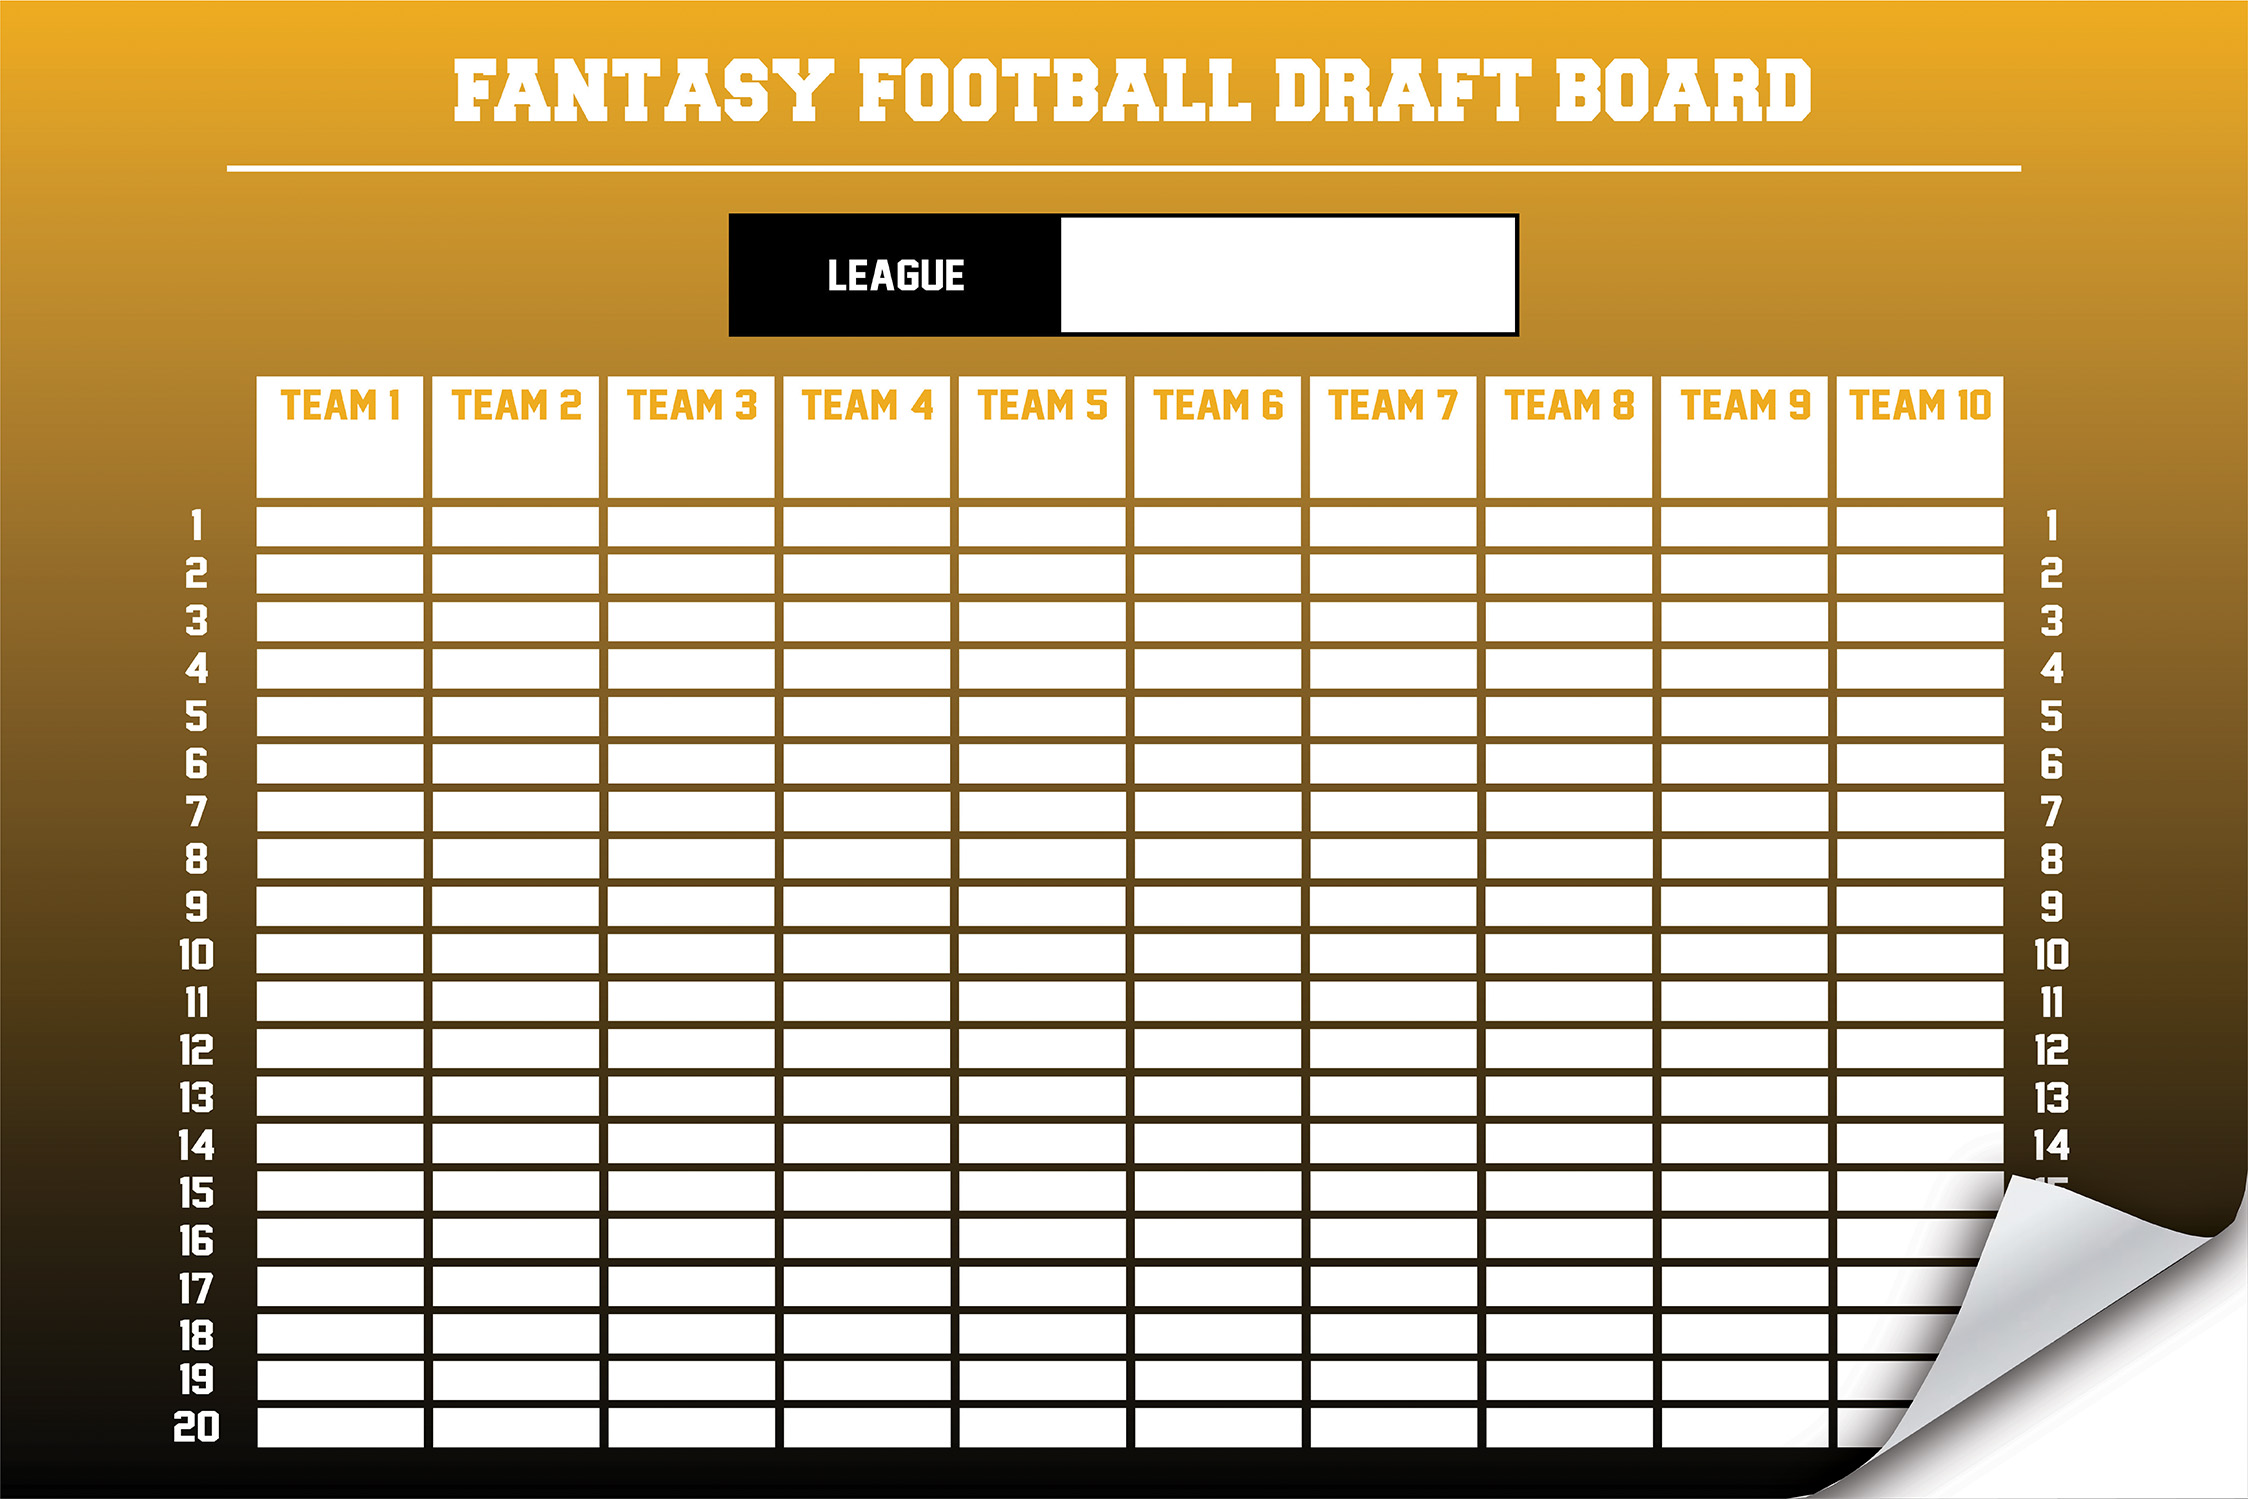 The Wooden Nickel Fantasy Football Draft Dry Erase Board